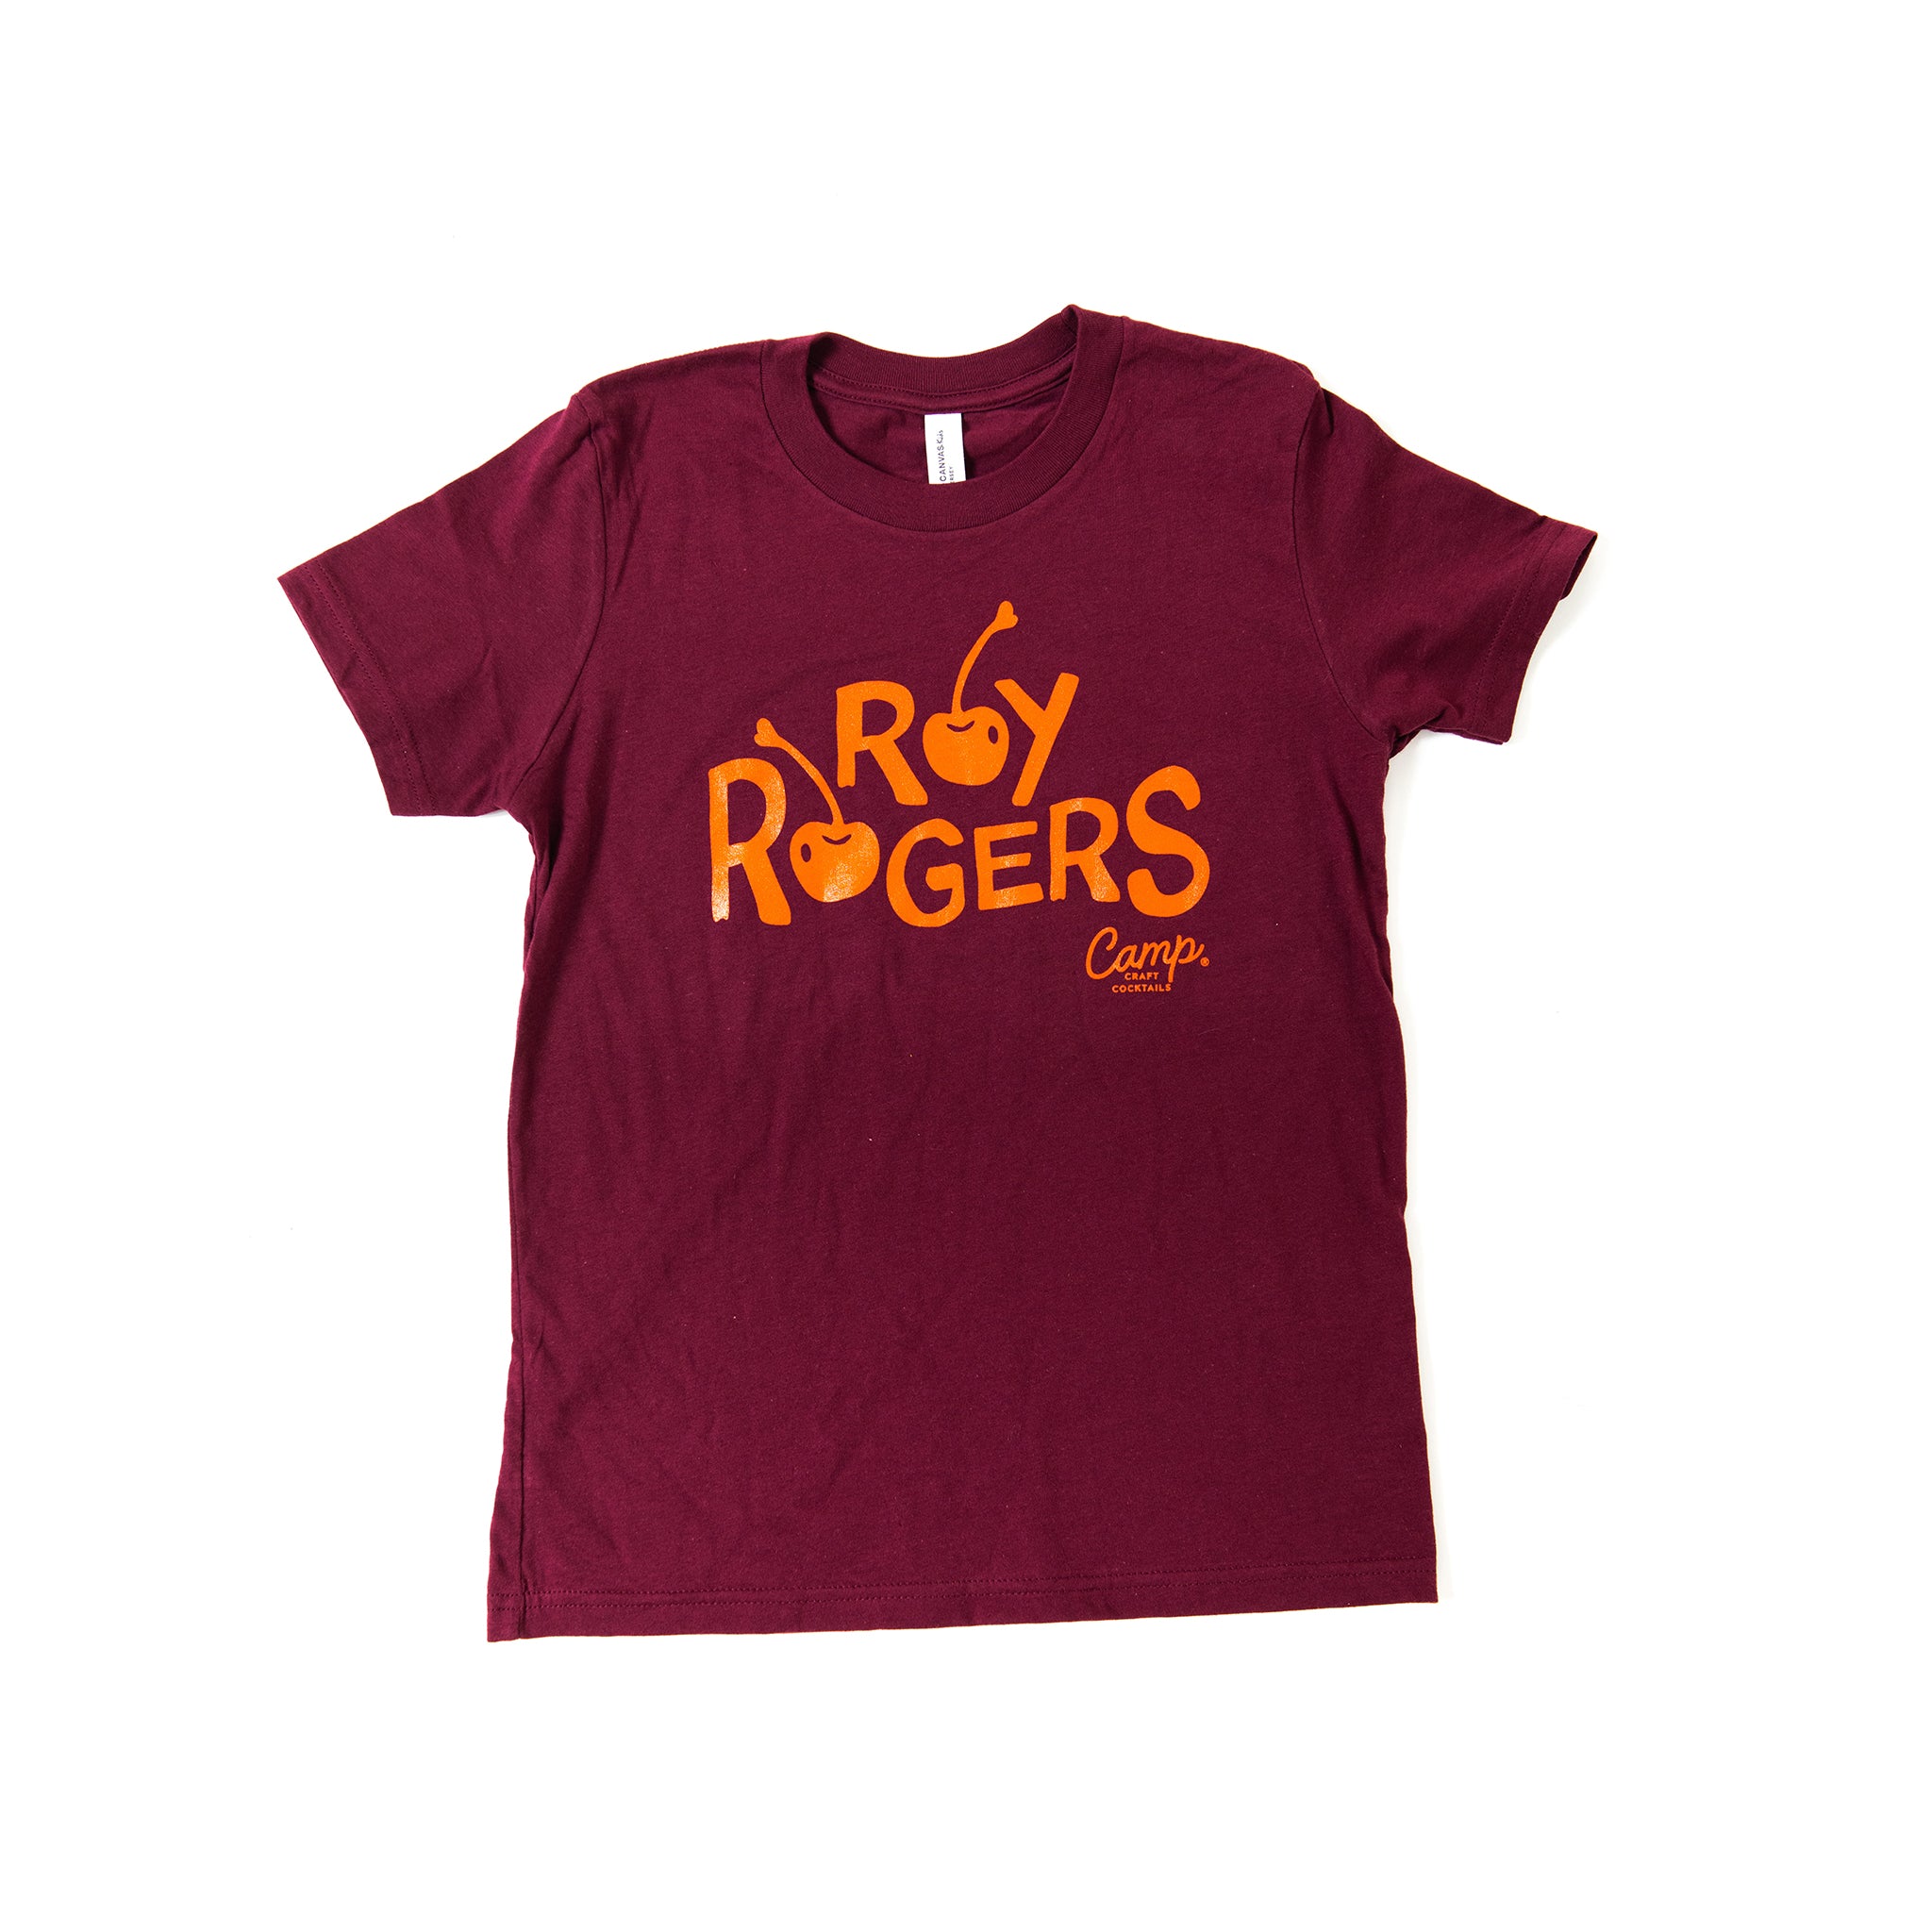 Camp Kids Roy Rogers T-shirt